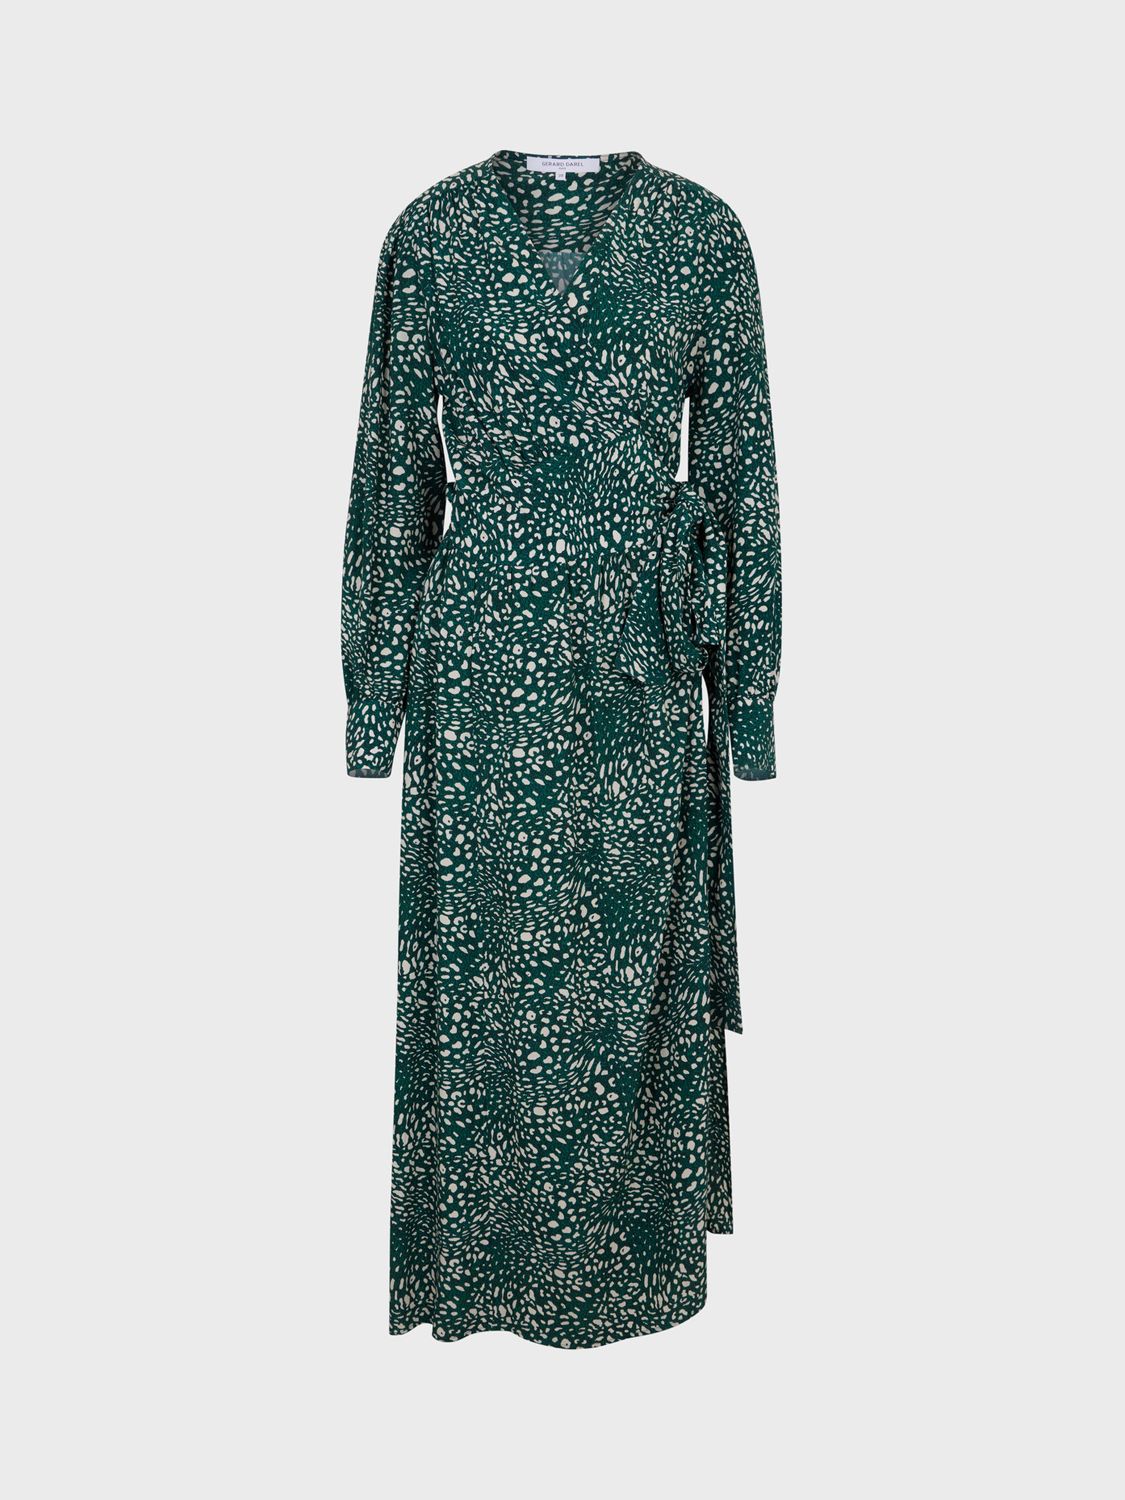 Gerard Darel Jovana Abstract Print Wrap Dress, Green at John Lewis ...